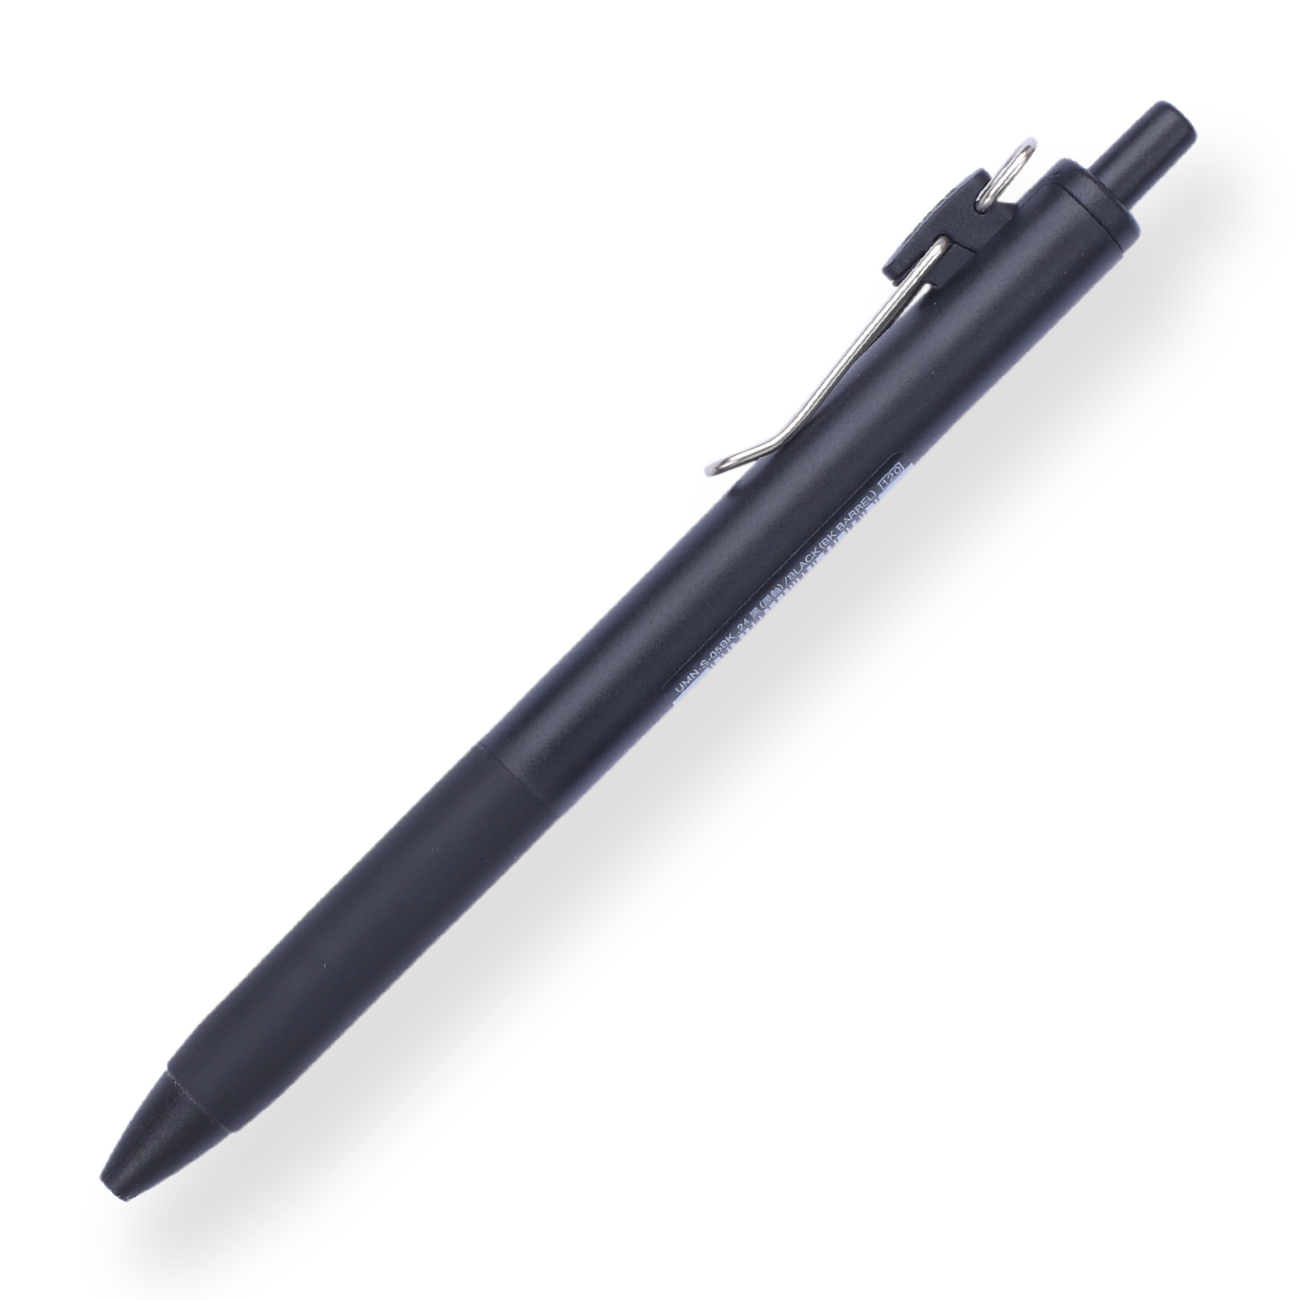 Uni-ball One Gel Pen - 0.5 mm - Black (Black Body)